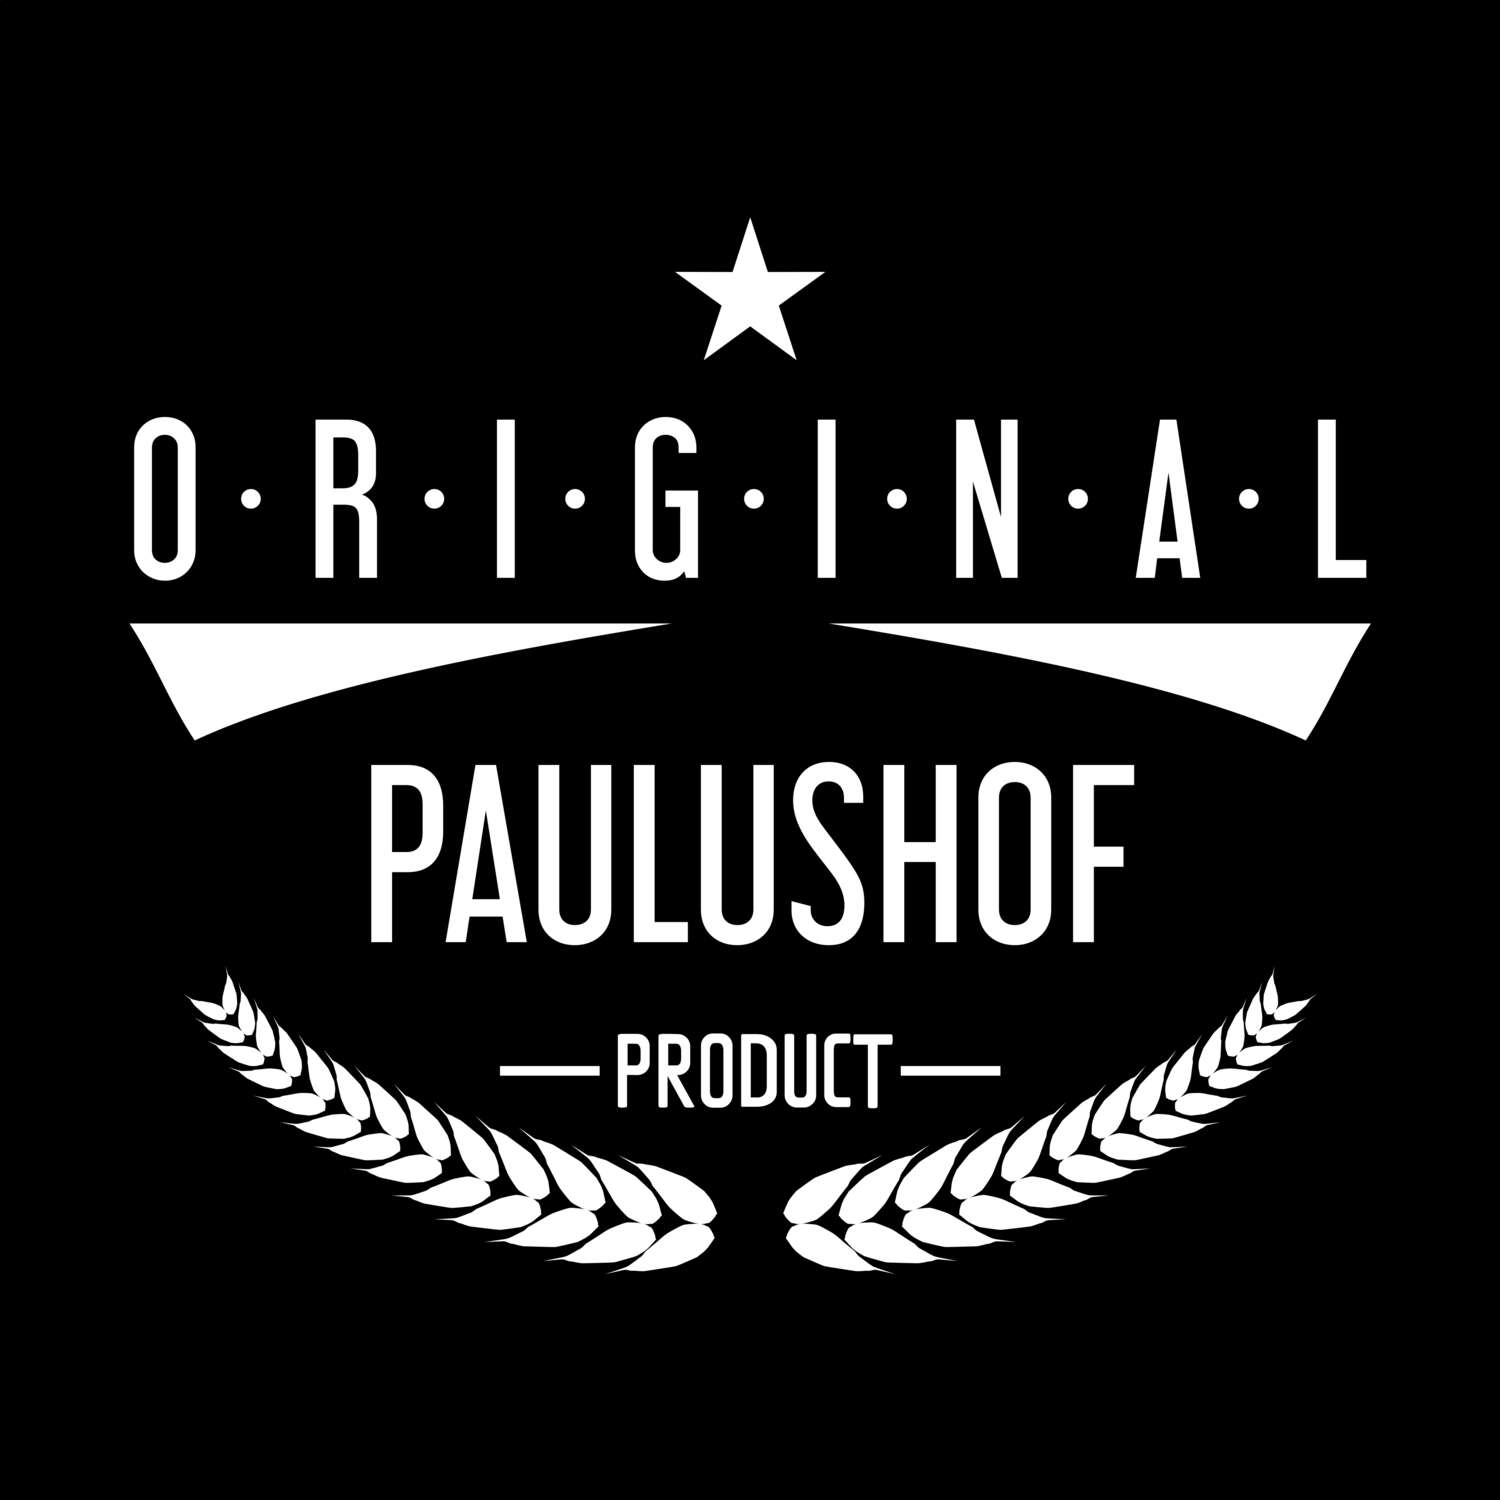 Paulushof T-Shirt »Original Product«